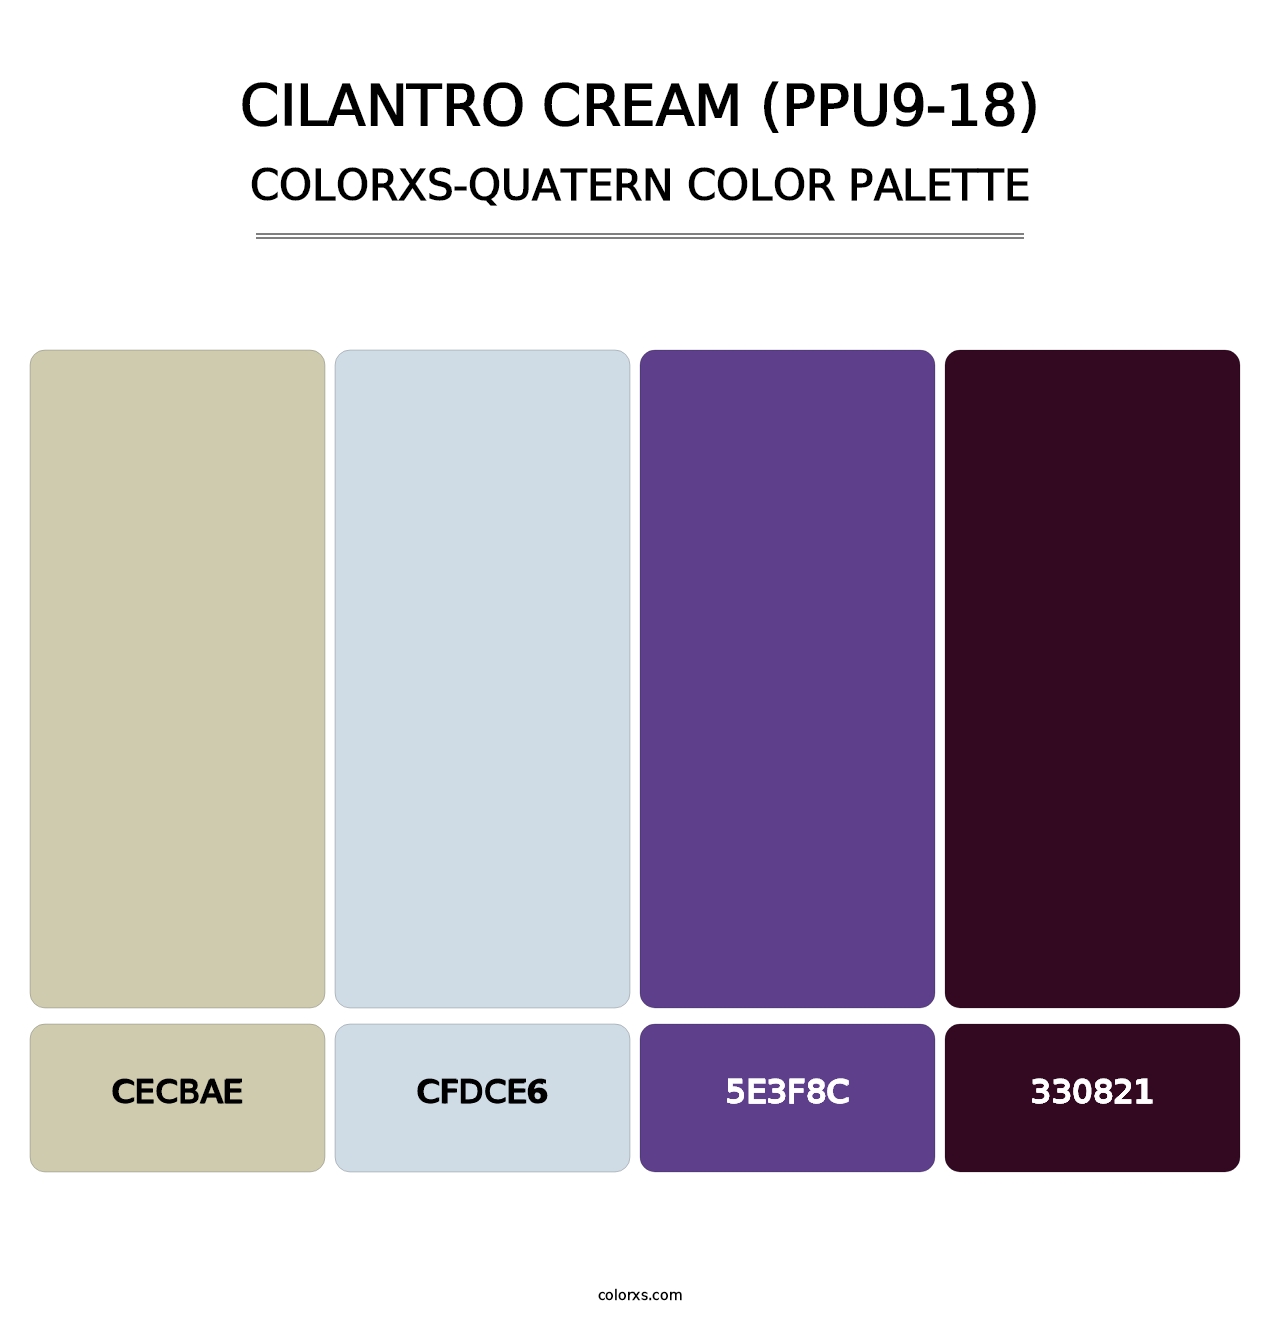 Cilantro Cream (PPU9-18) - Colorxs Quatern Palette